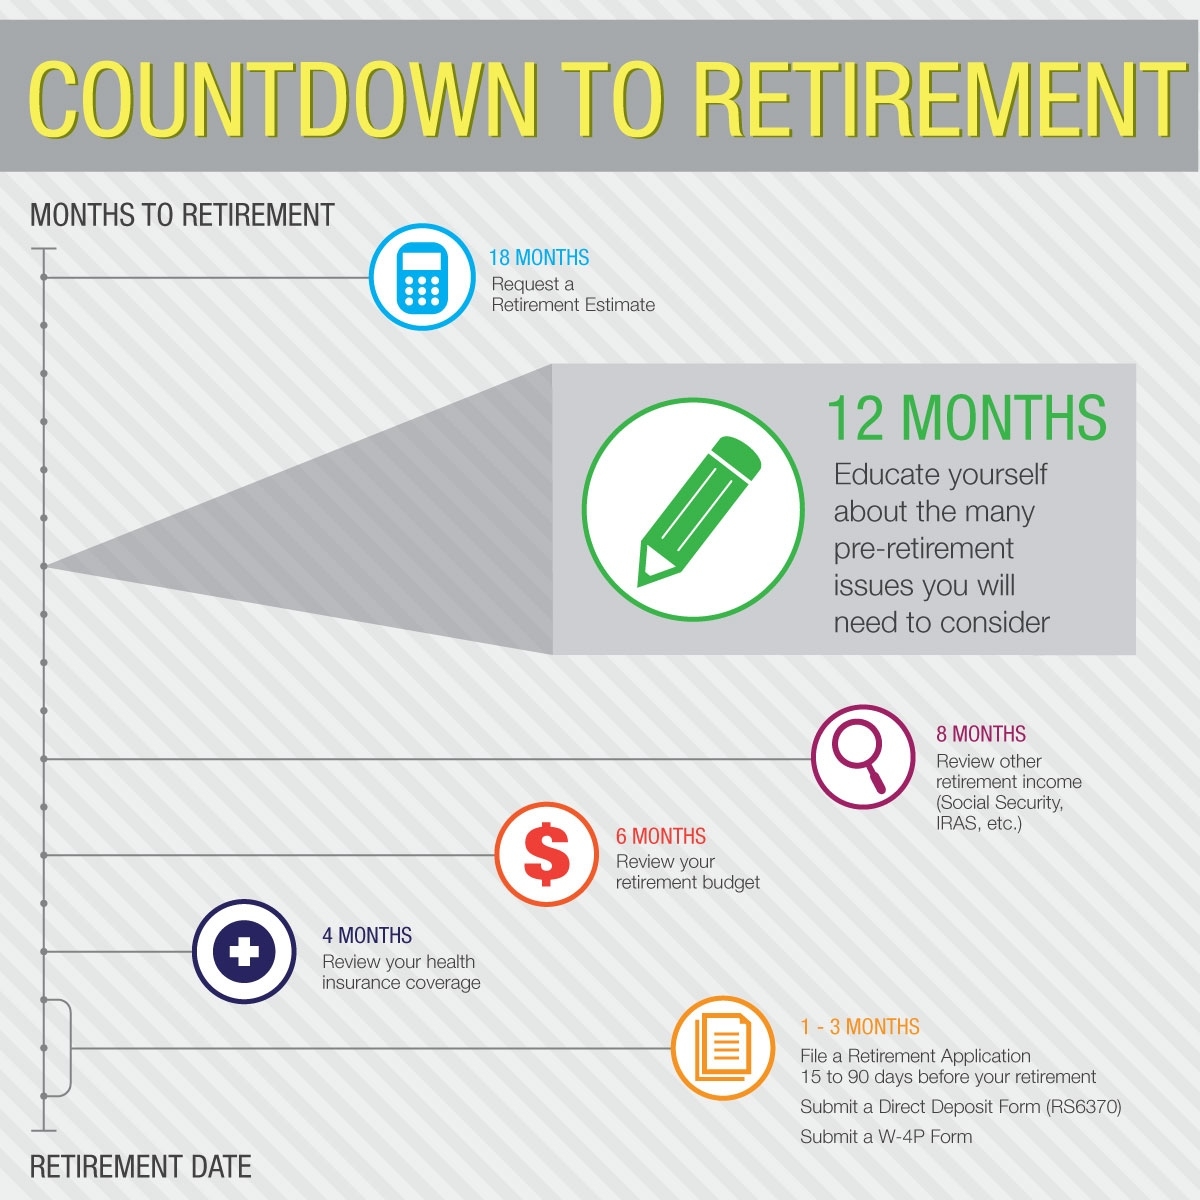 Countdown Retirement Calendar 2017 | Free Calendar 2017 Free Countdown To Retirement Calendar